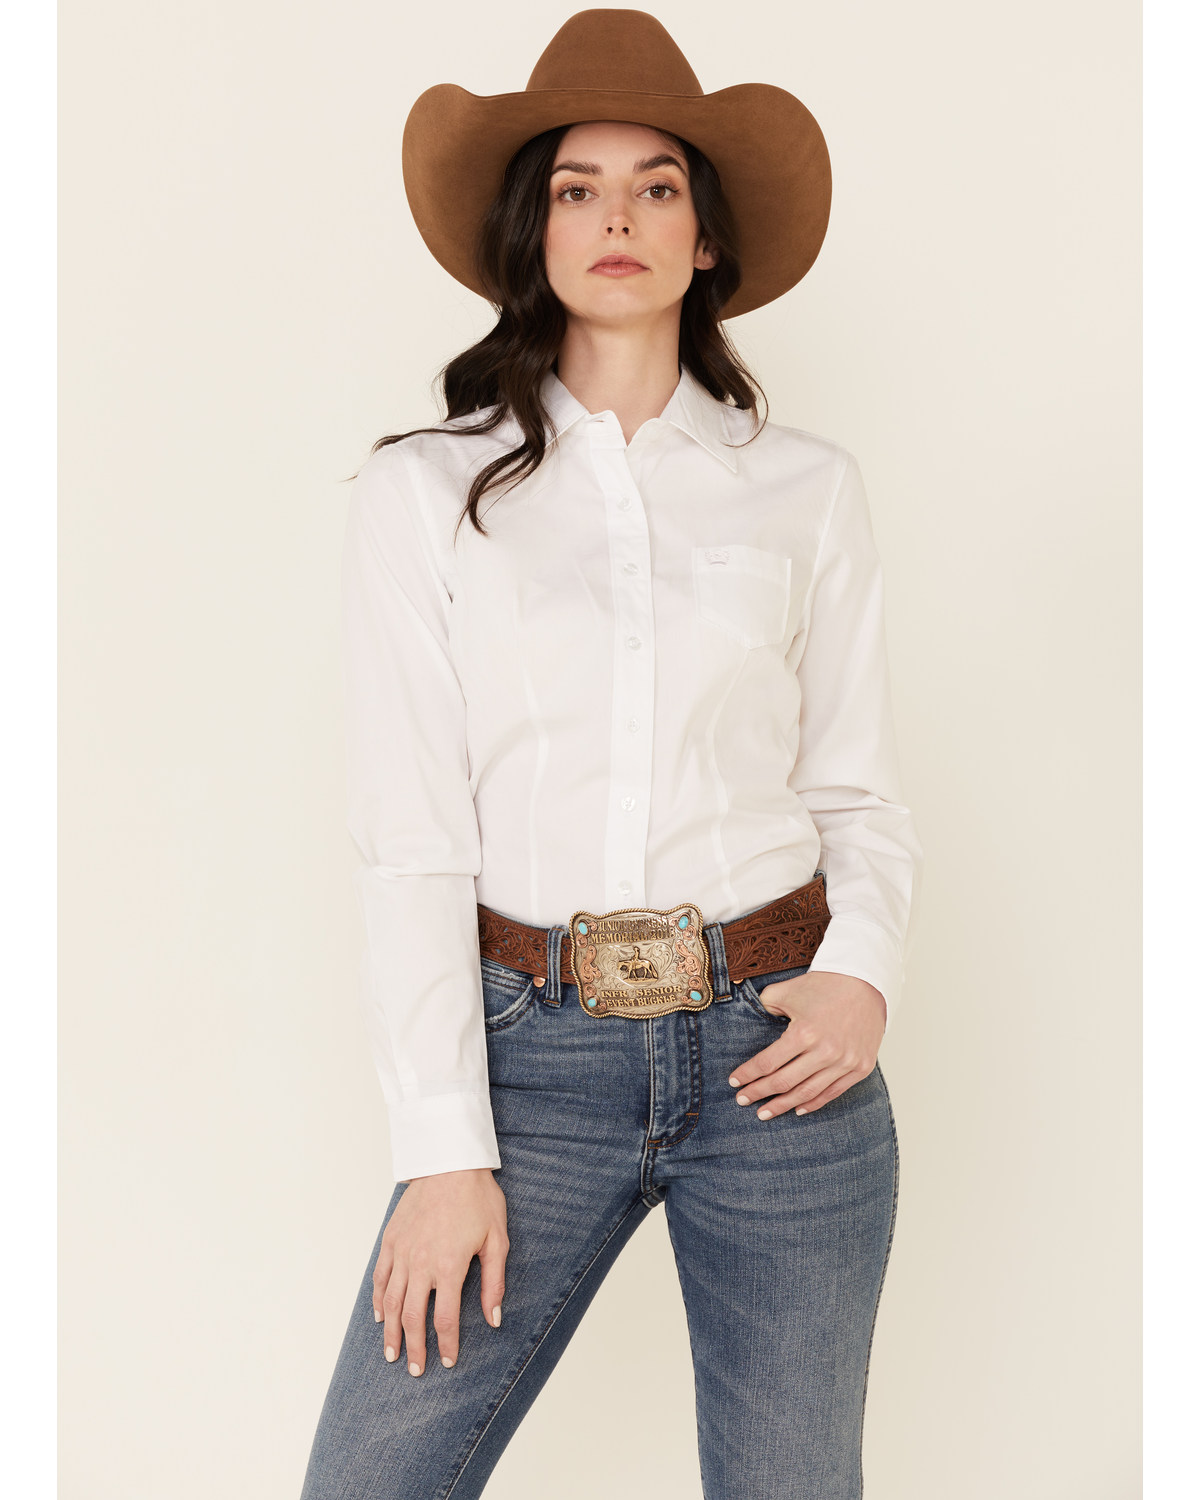 Cinch Women's Solid Long Sleeve Button Down Western Shirt